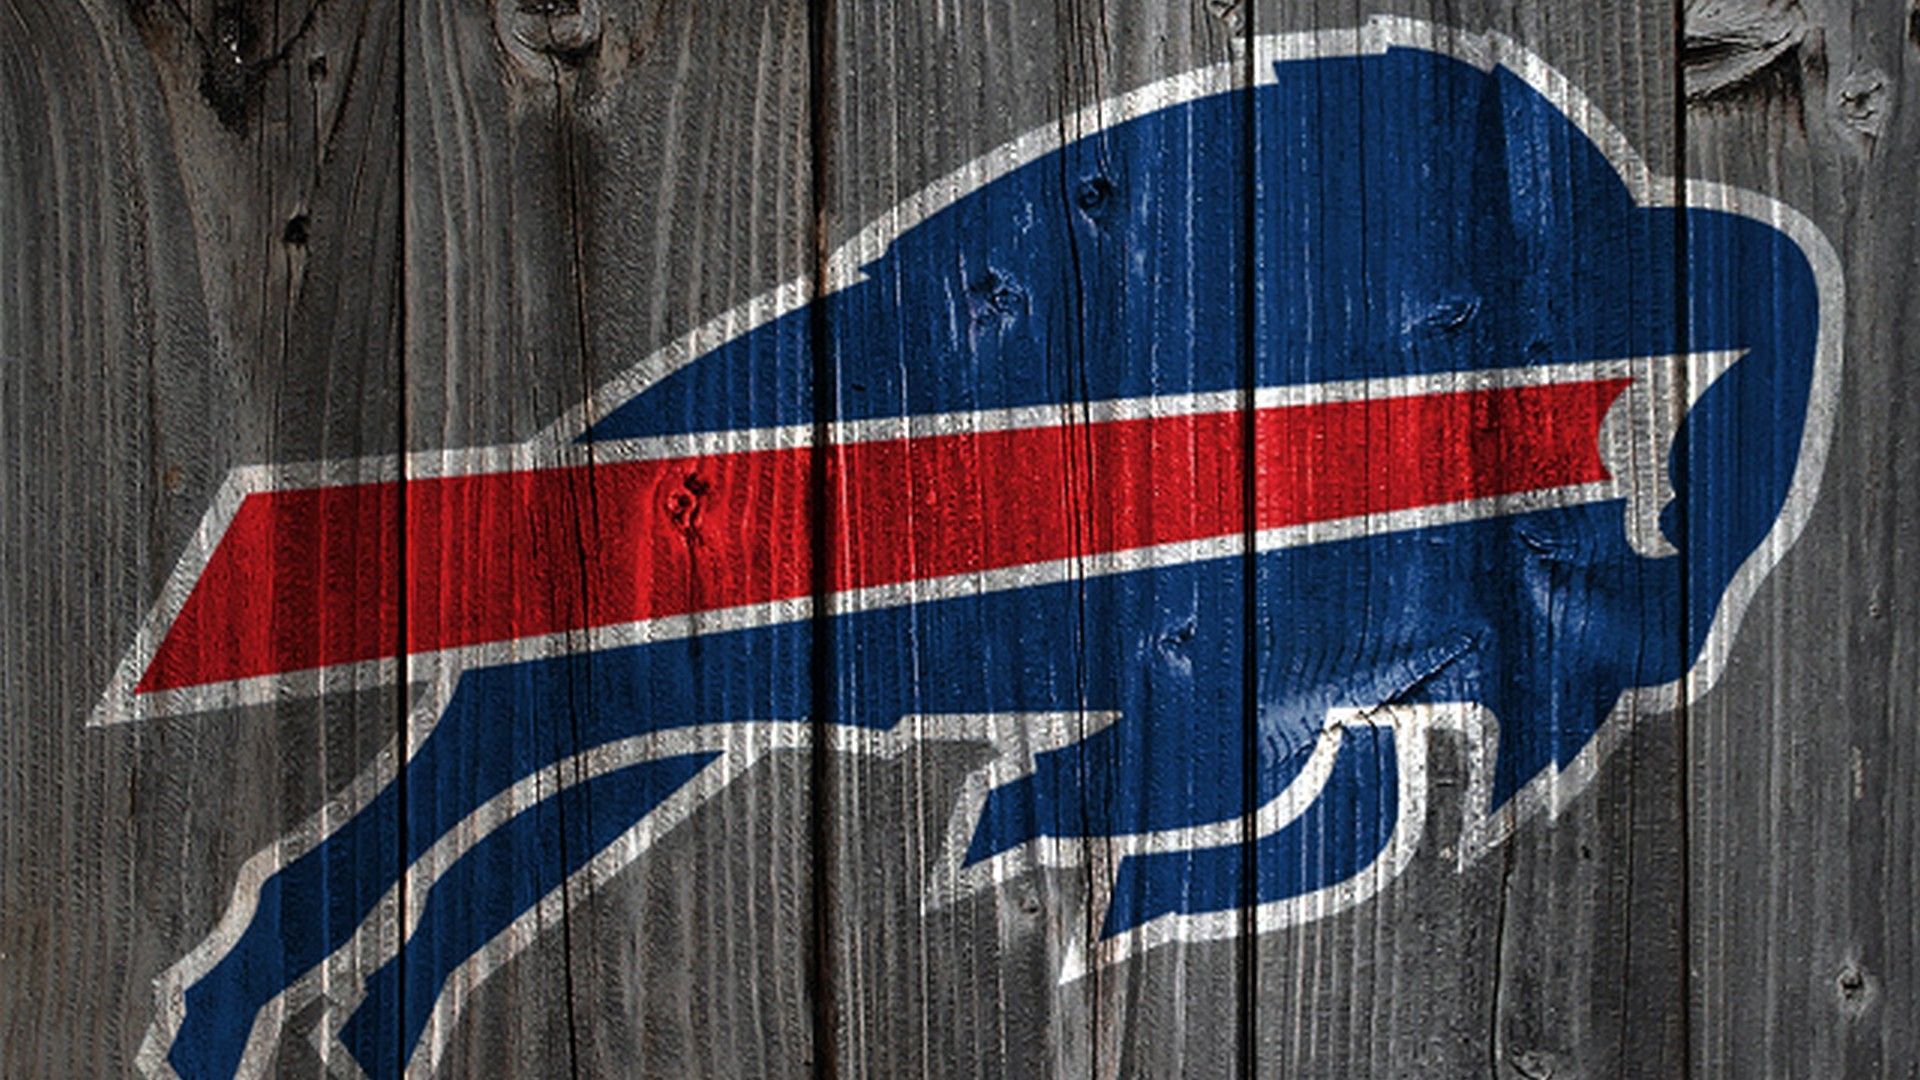 Buffalo Bills Wallpaper NFL Football Wallpaper. Buffalo bills, Buffalo bills stuff, Buffalo